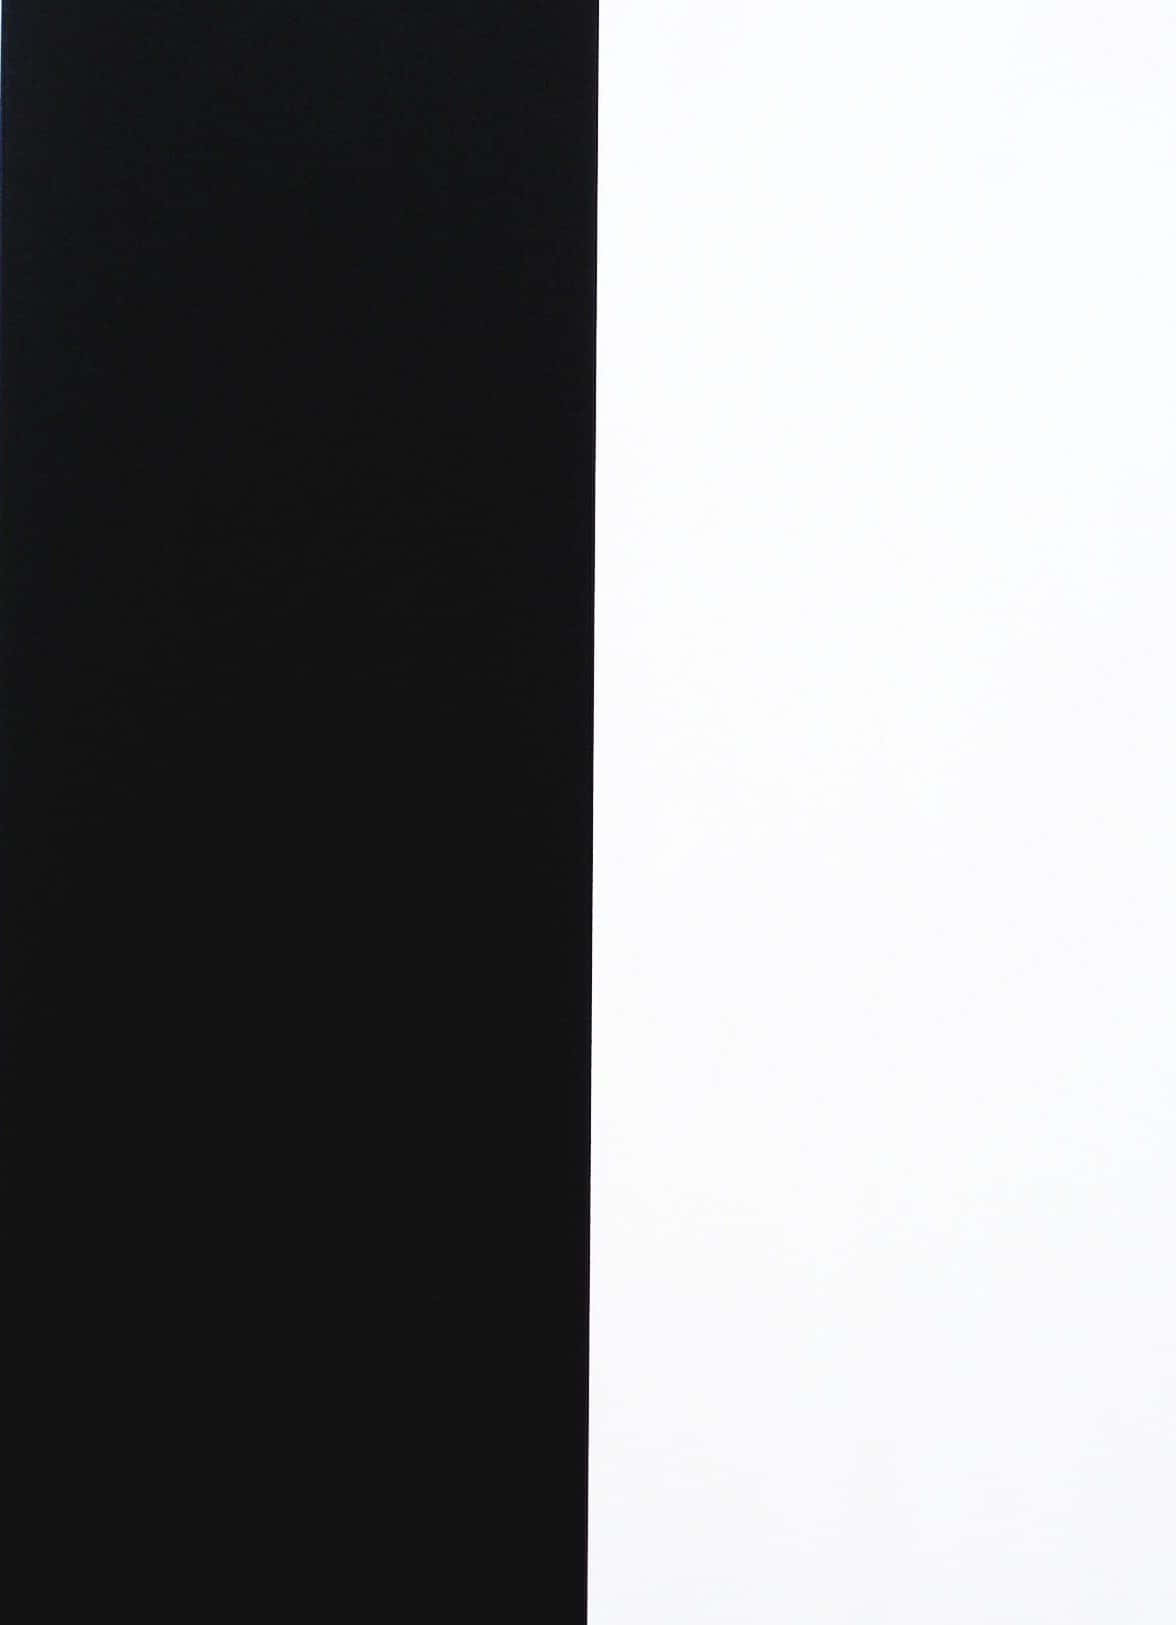 A striking split background with half black and half white Wallpaper